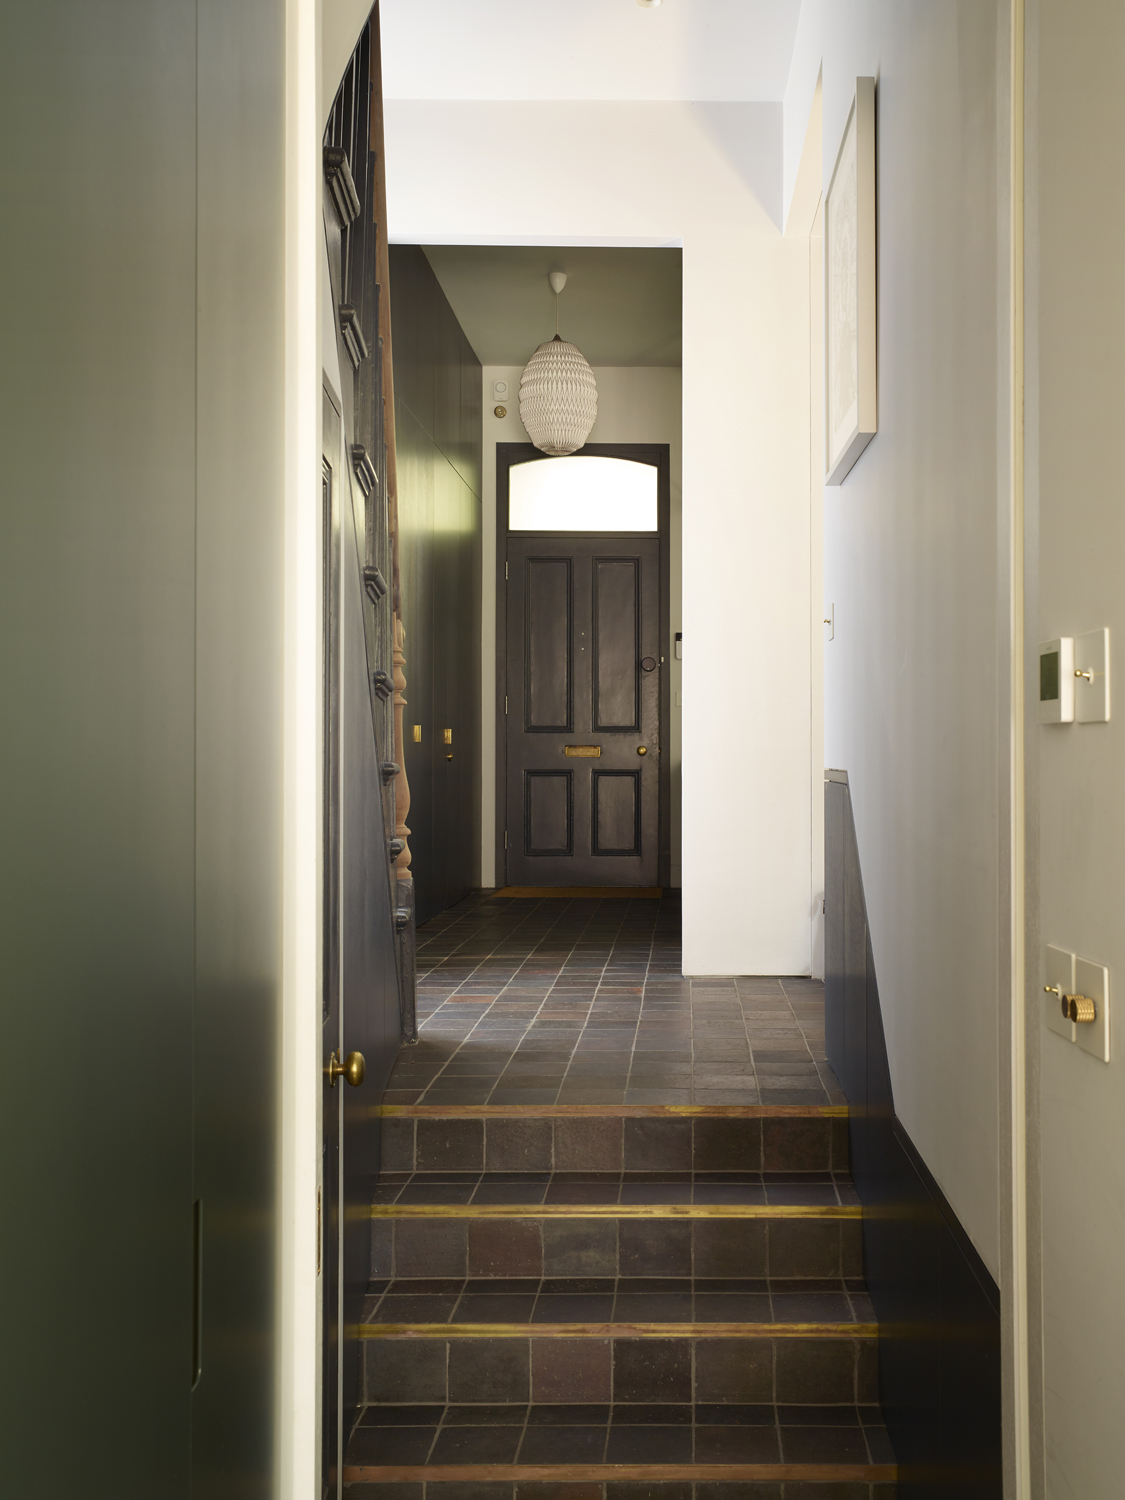 evoke projects ltd GR tiled entrance hallway